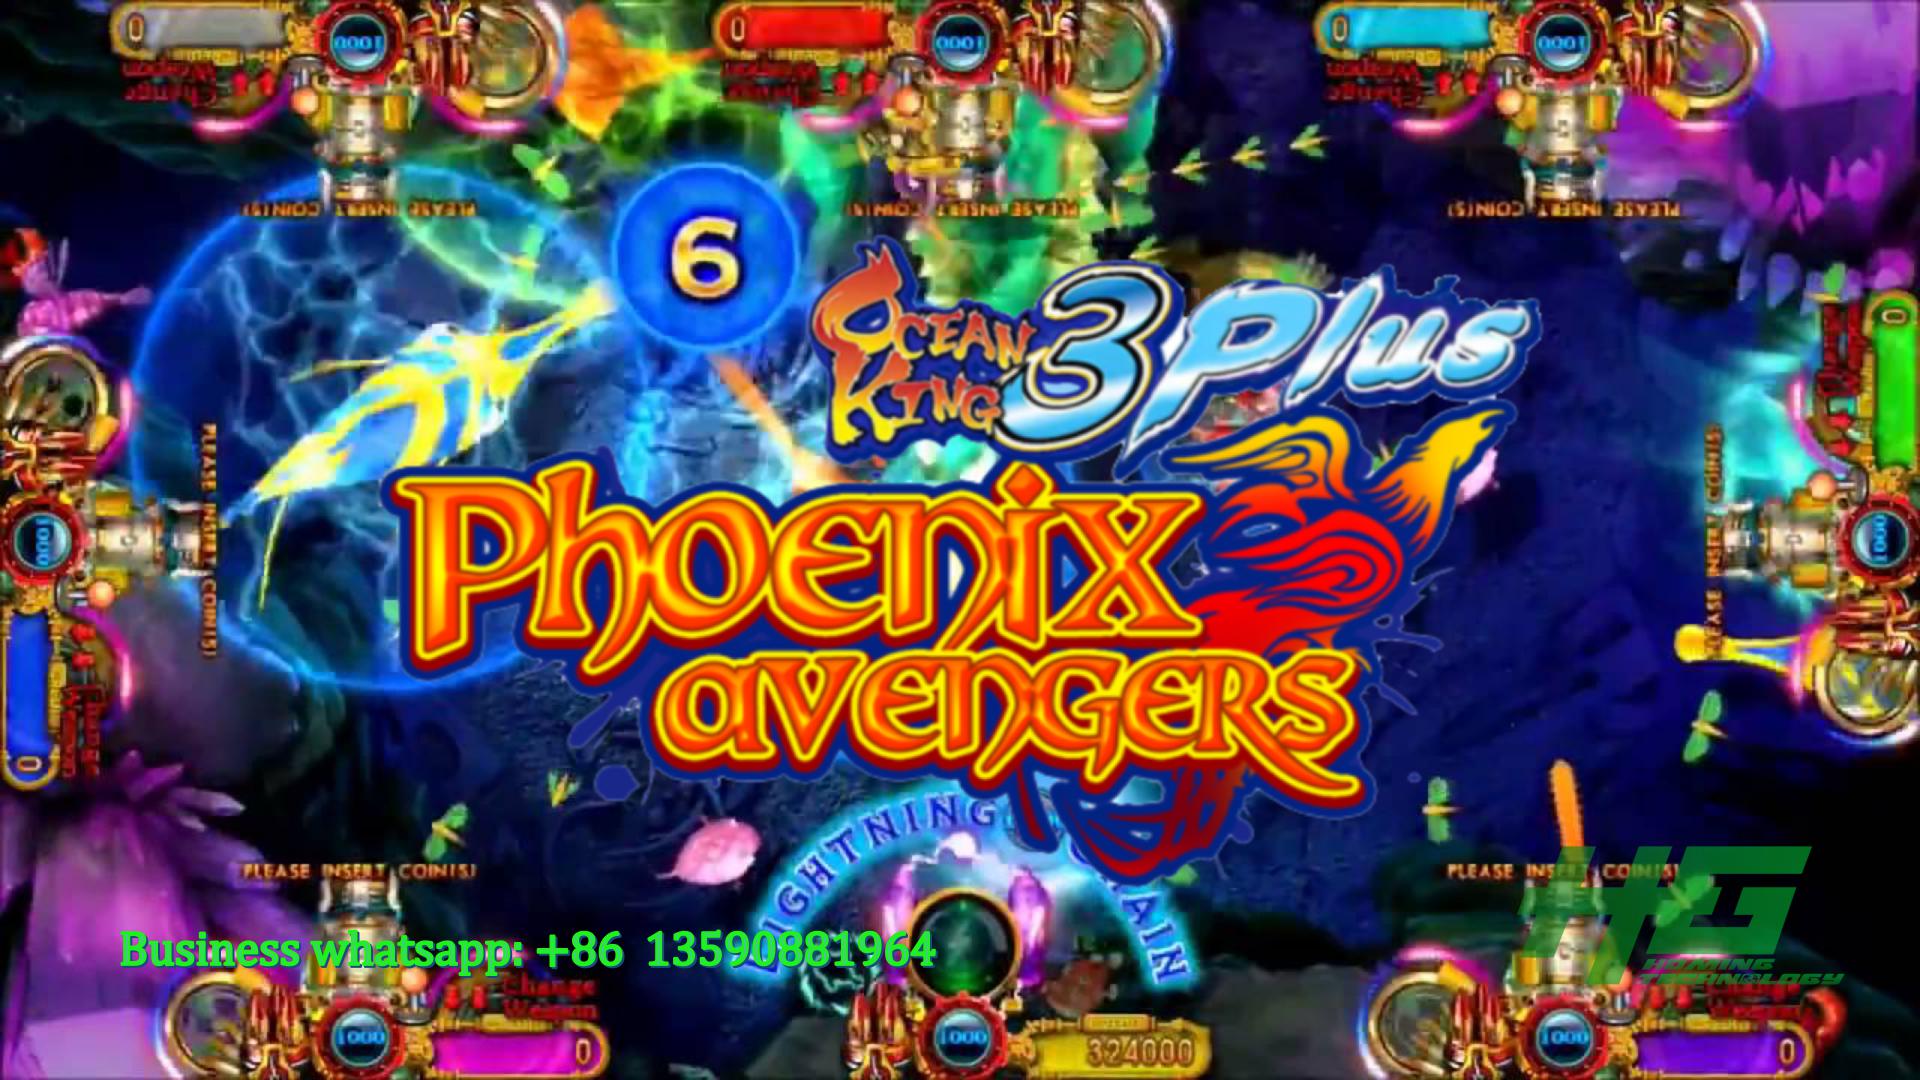 IGS Original Ocean King 3 Plus Phoenix Avengers,Ocean King 3 Plus Fish Casino Game Machine For Sale 